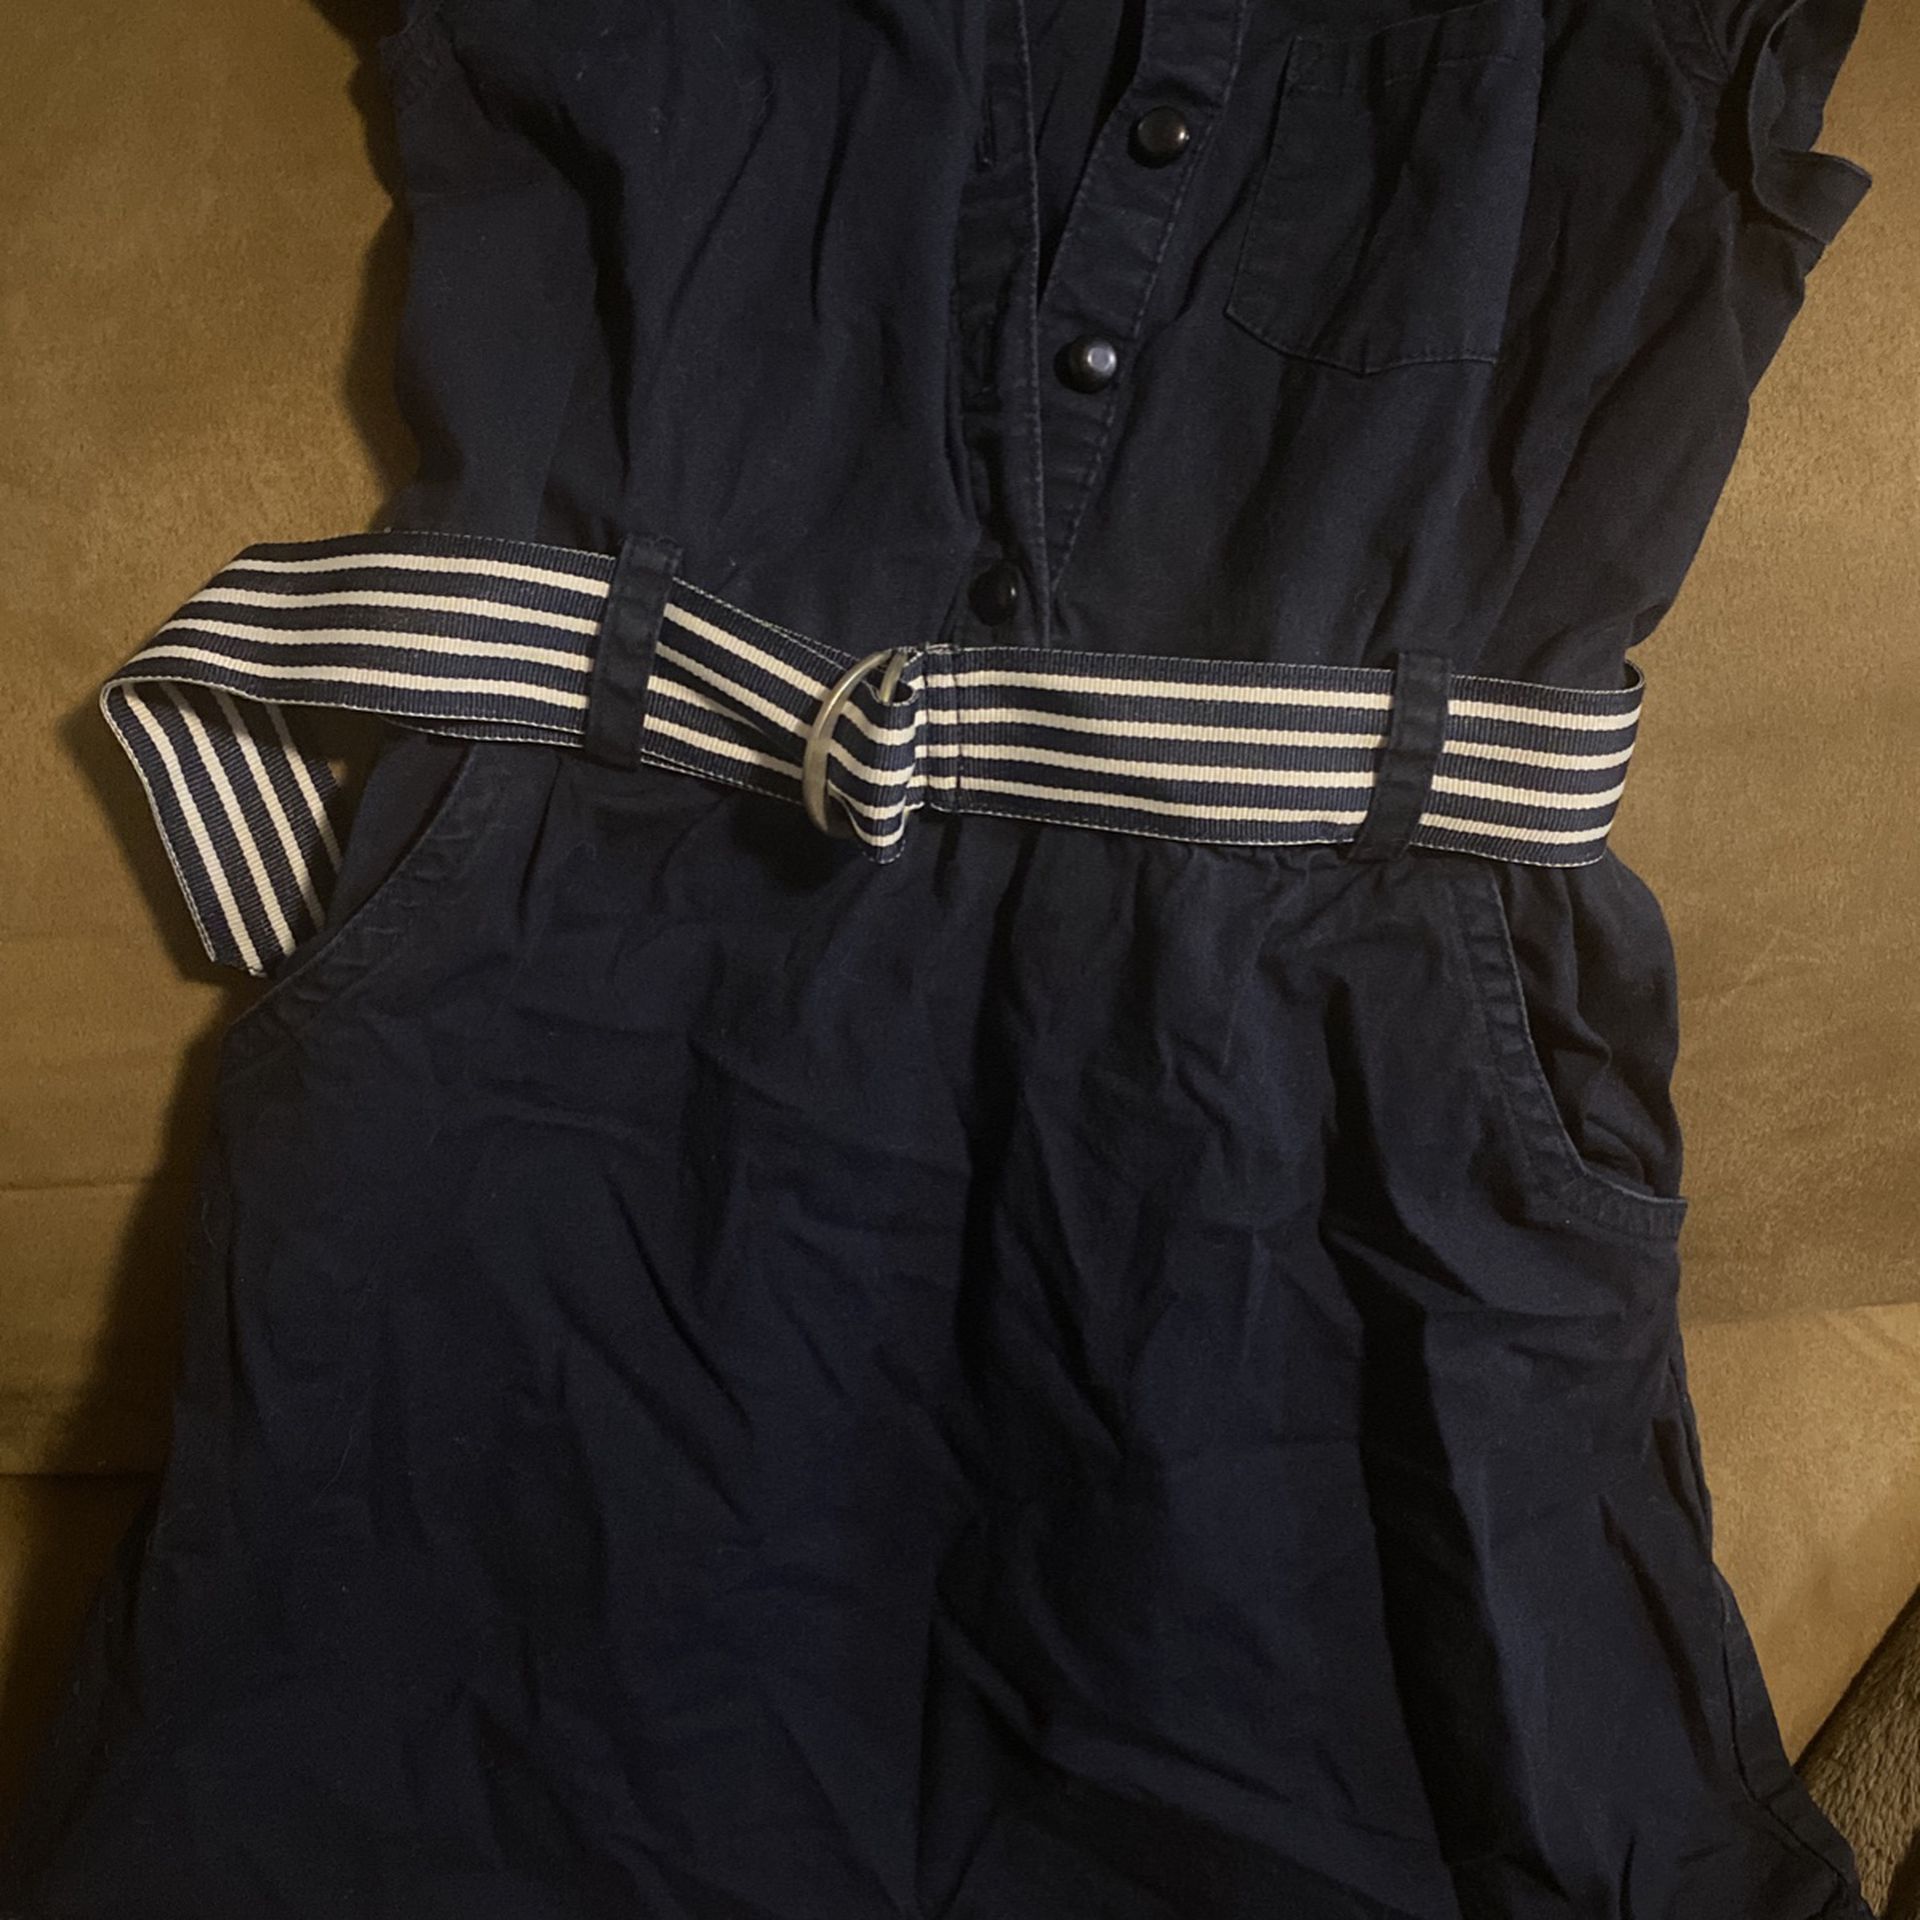 Old Navy Girls Uniform